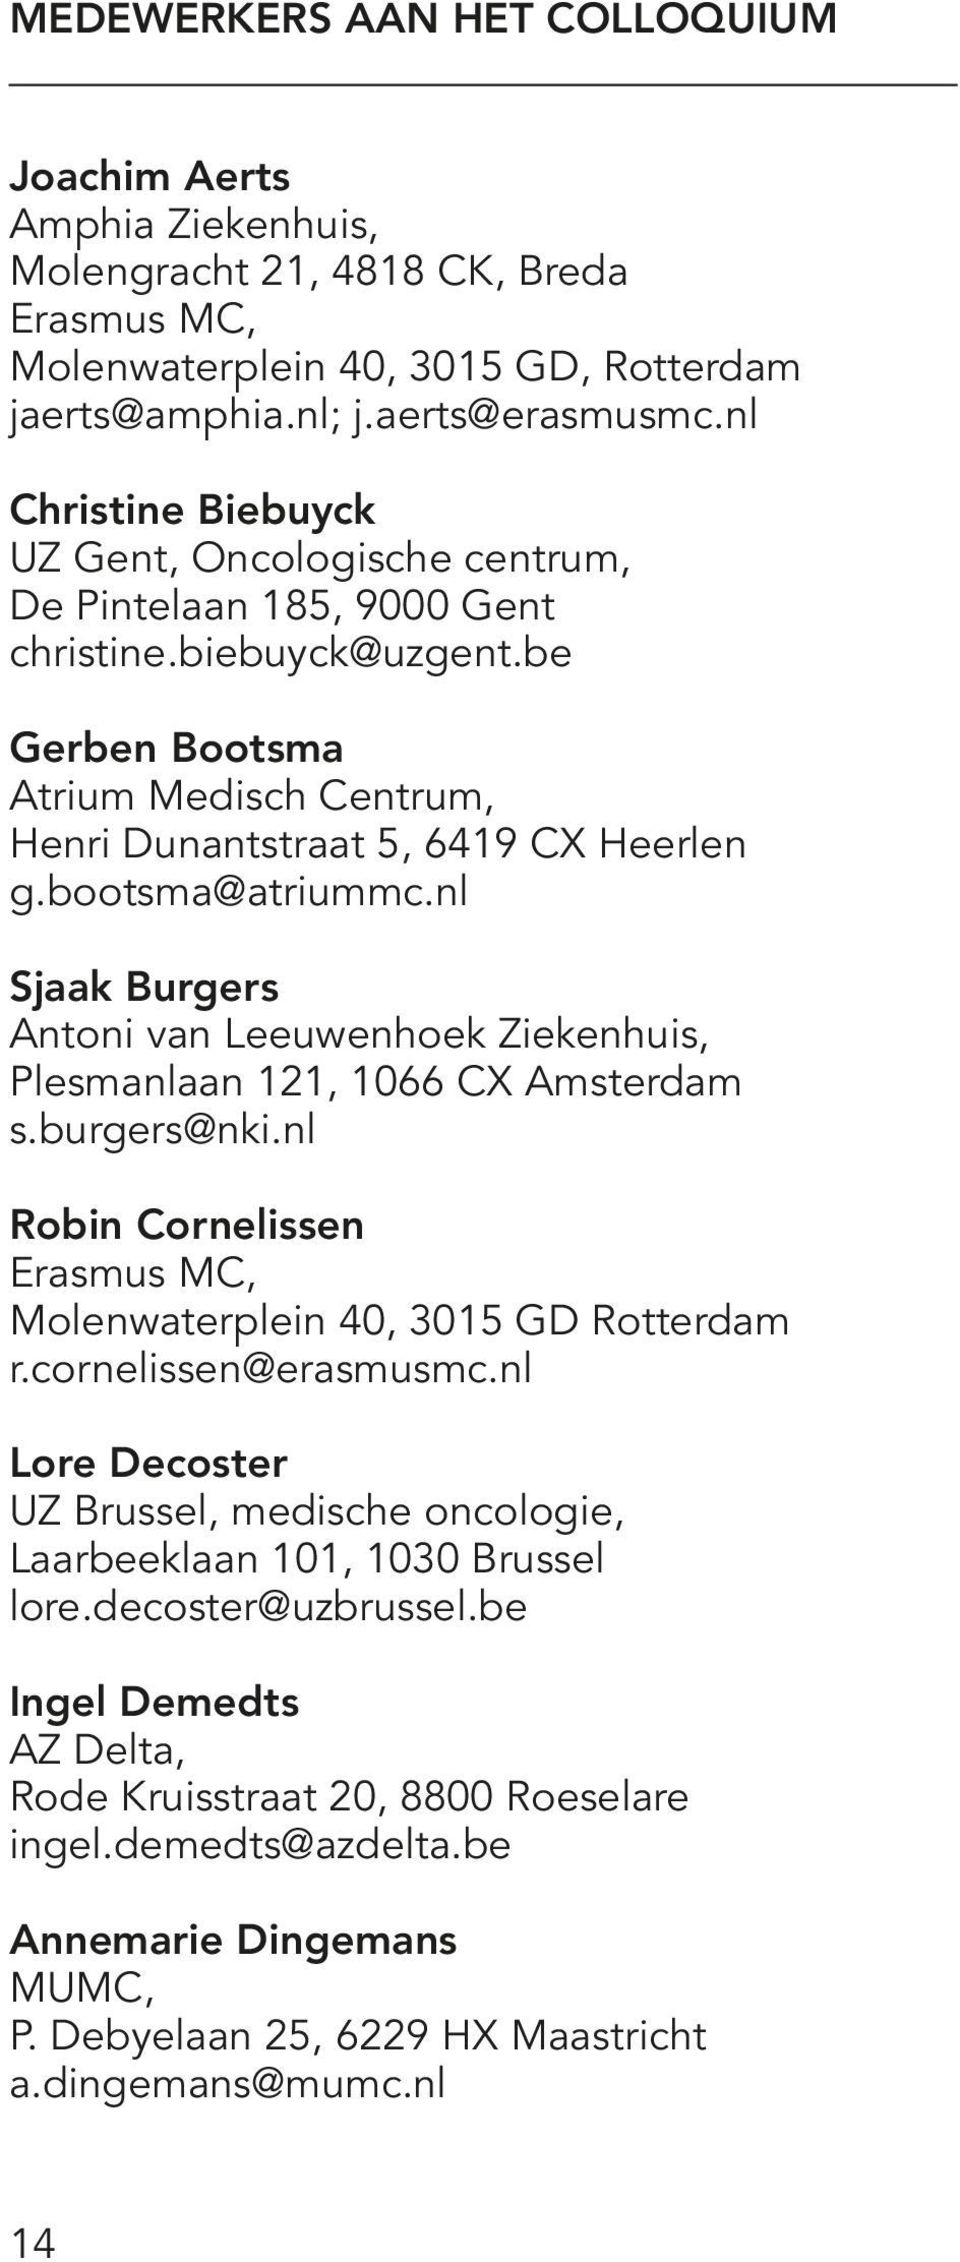 bootsma@atriummc.nl Sjaak Burgers Antoni van Leeuwenhoek Ziekenhuis, Plesmanlaan 121, 1066 CX Amsterdam s.burgers@nki.nl Robin Cornelissen Erasmus MC, Molenwaterplein 40, 3015 GD Rotterdam r.